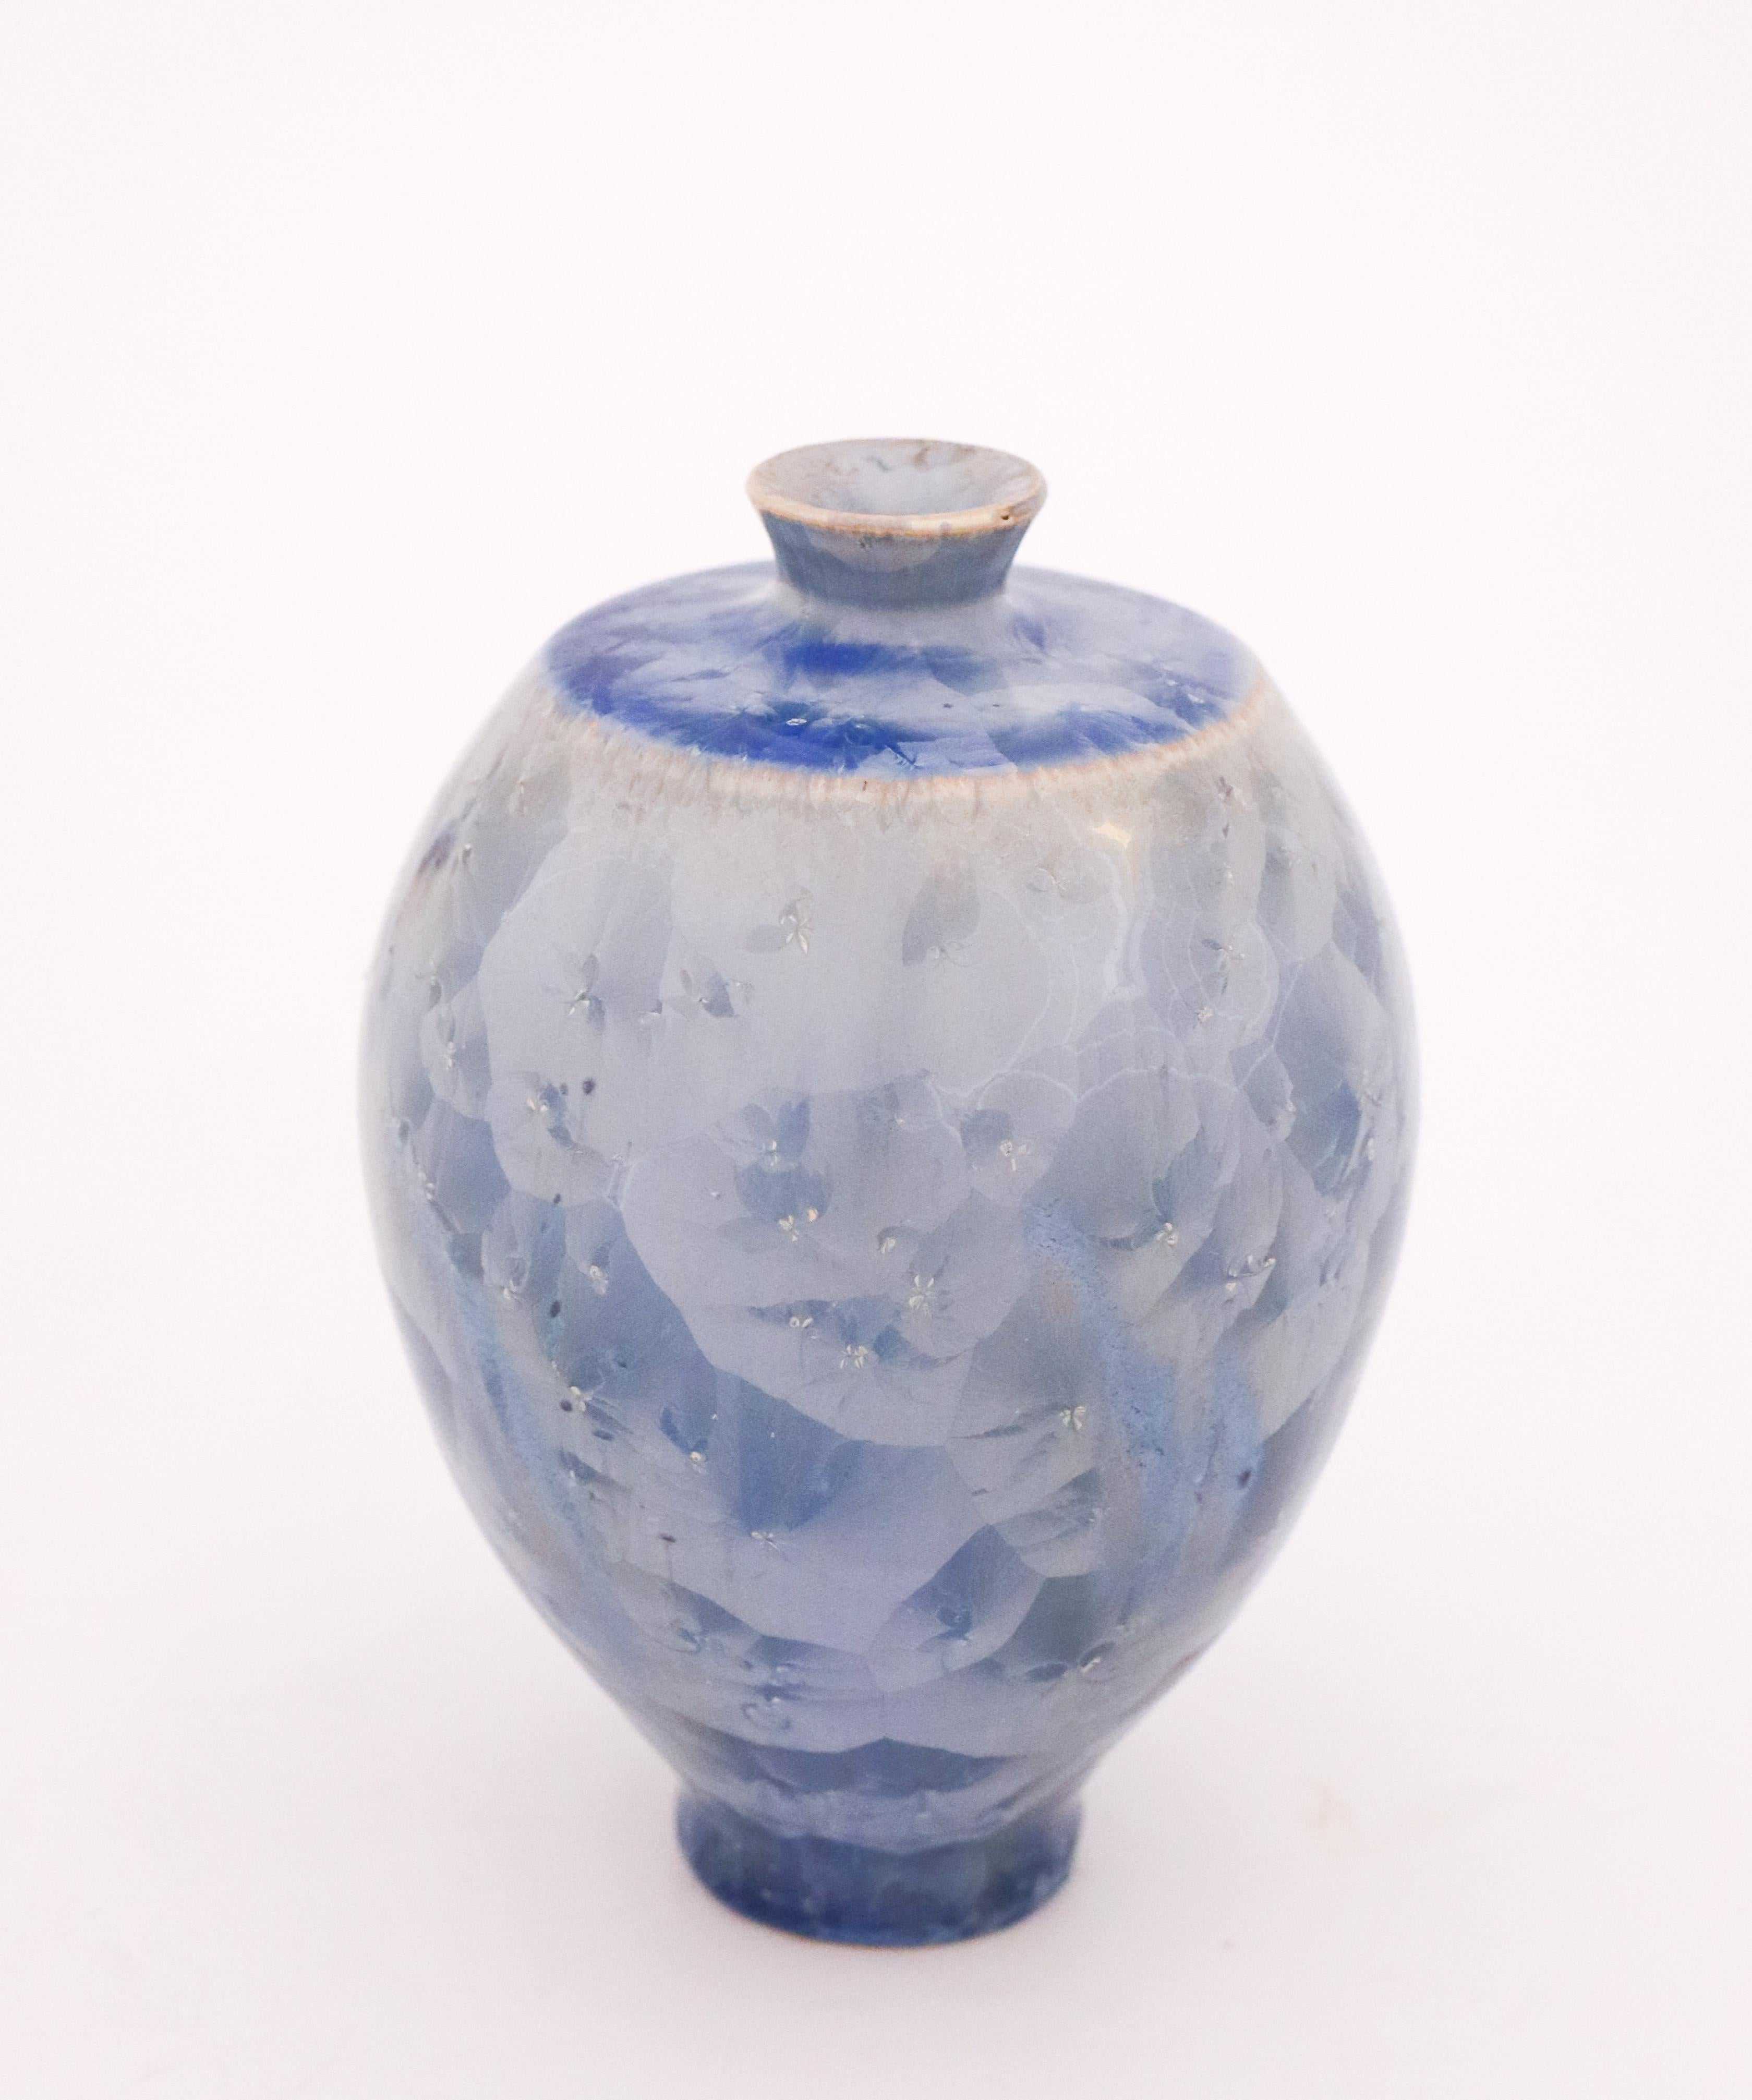 Isak Isaksson Vase, Blue Crystalline Glaze, Contemporary Swedish Ceramicist 1